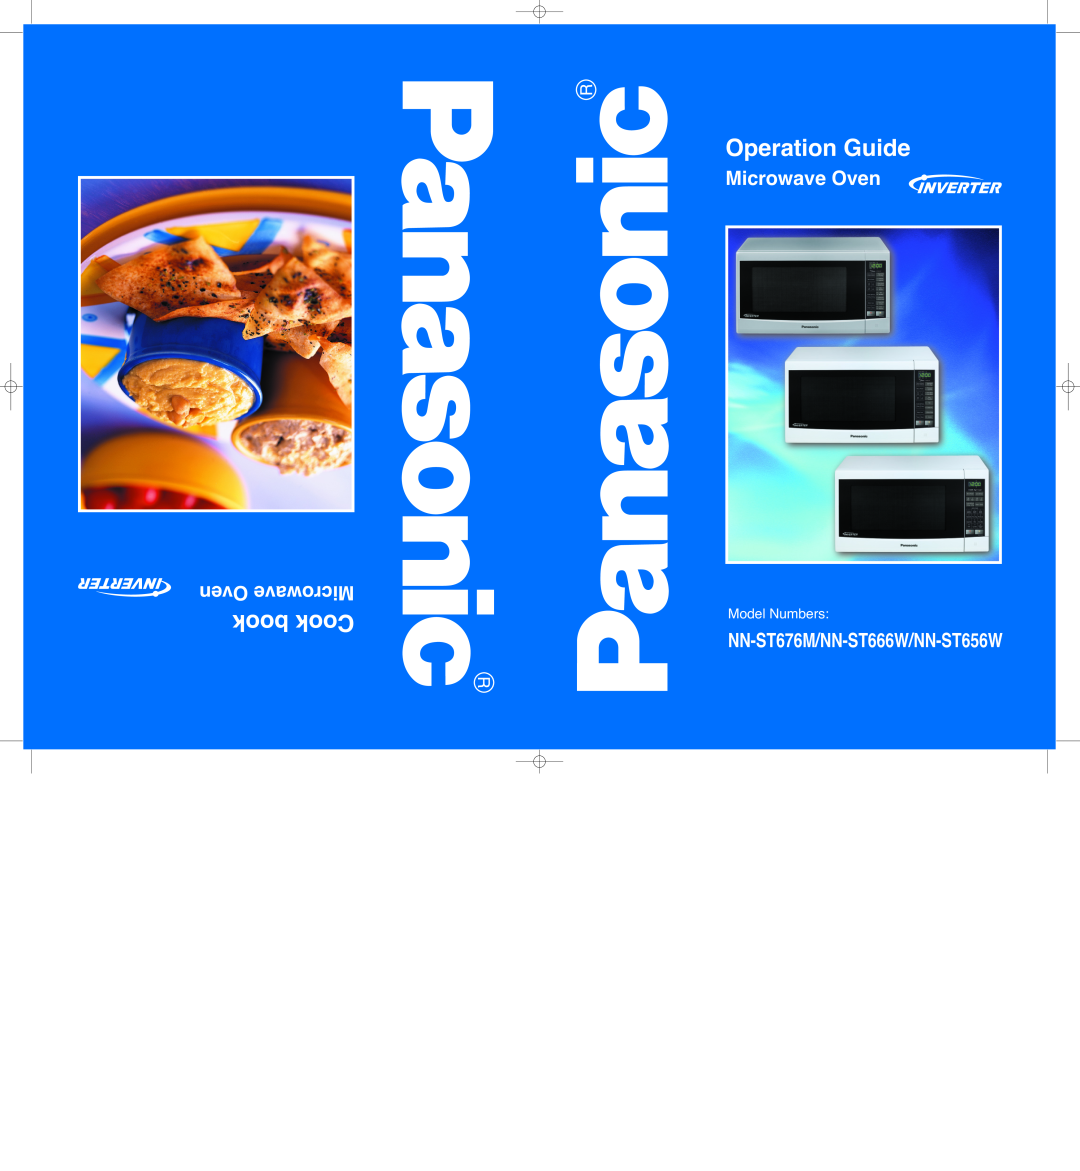 Panasonic manual Operating Instructions, ﺎﻤﻨﻫﺍﺭ ﻪﭼﺮﺘﻓﺩ ﻞﻴﻐﺸﺘﻟﺍ ﺕﺍﺩﺎﺷﺭﺇ, Microwave Oven, Model NN-ST656W 